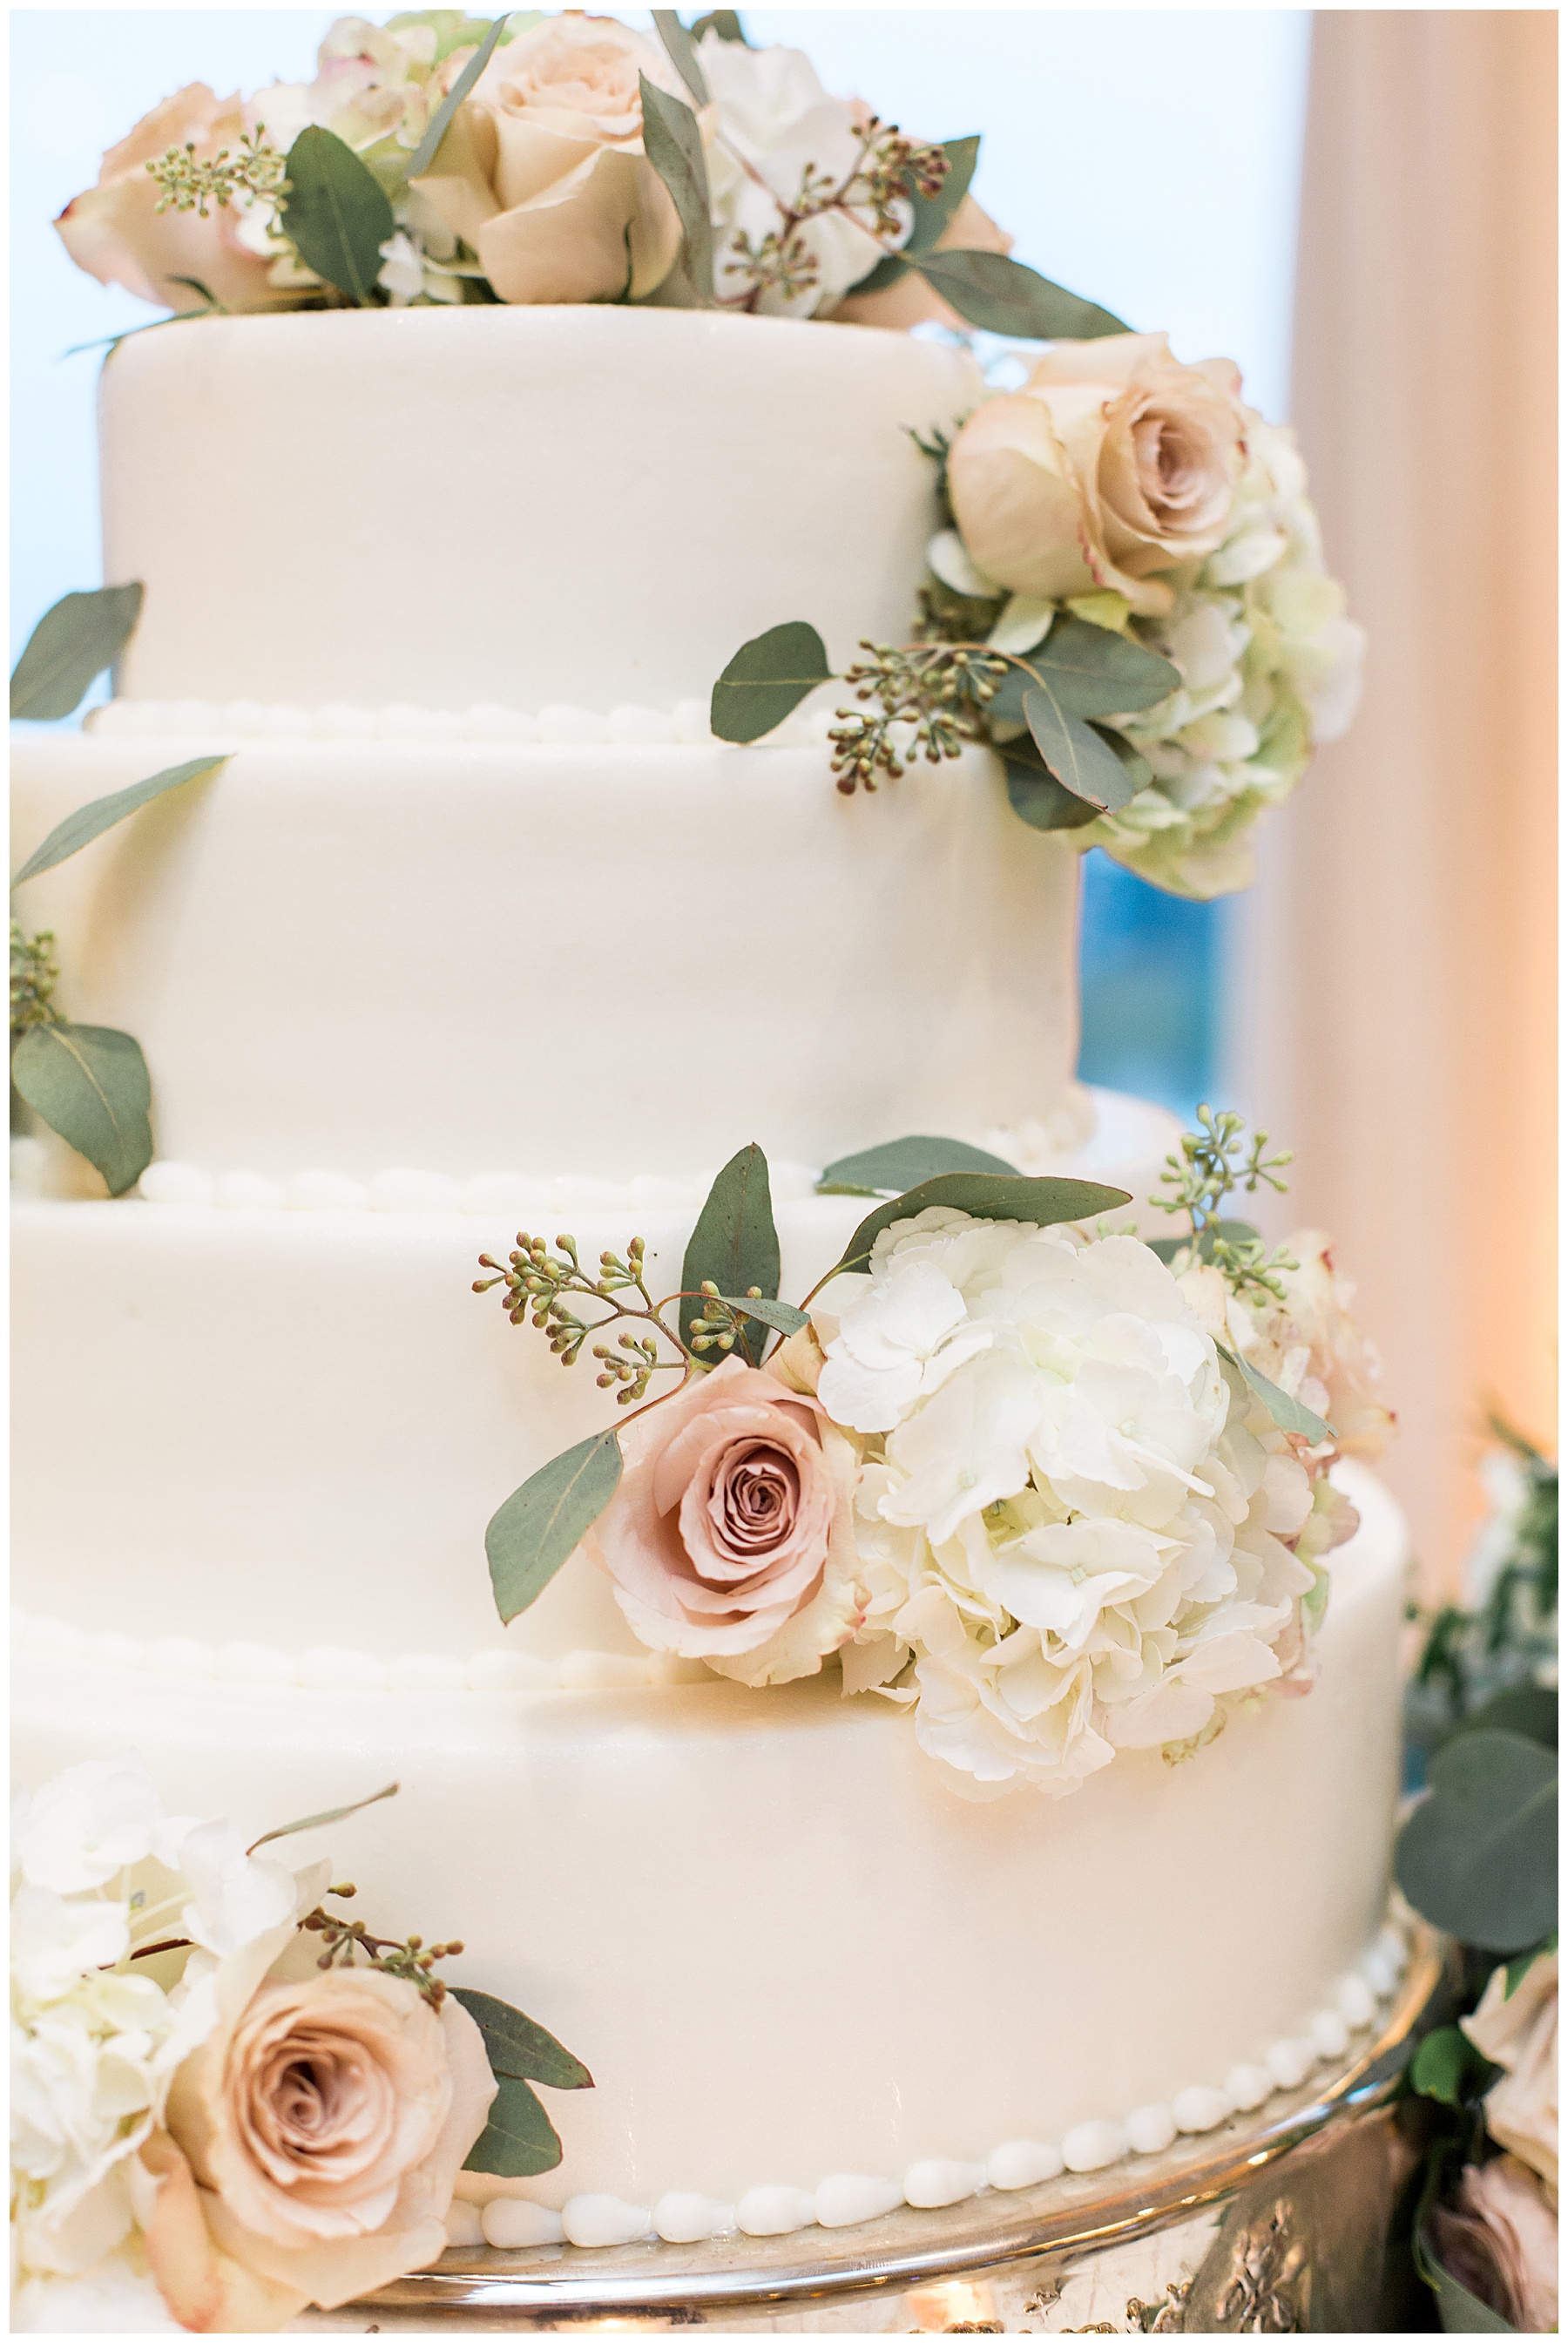 New-York-Wedding-Cake.jpg